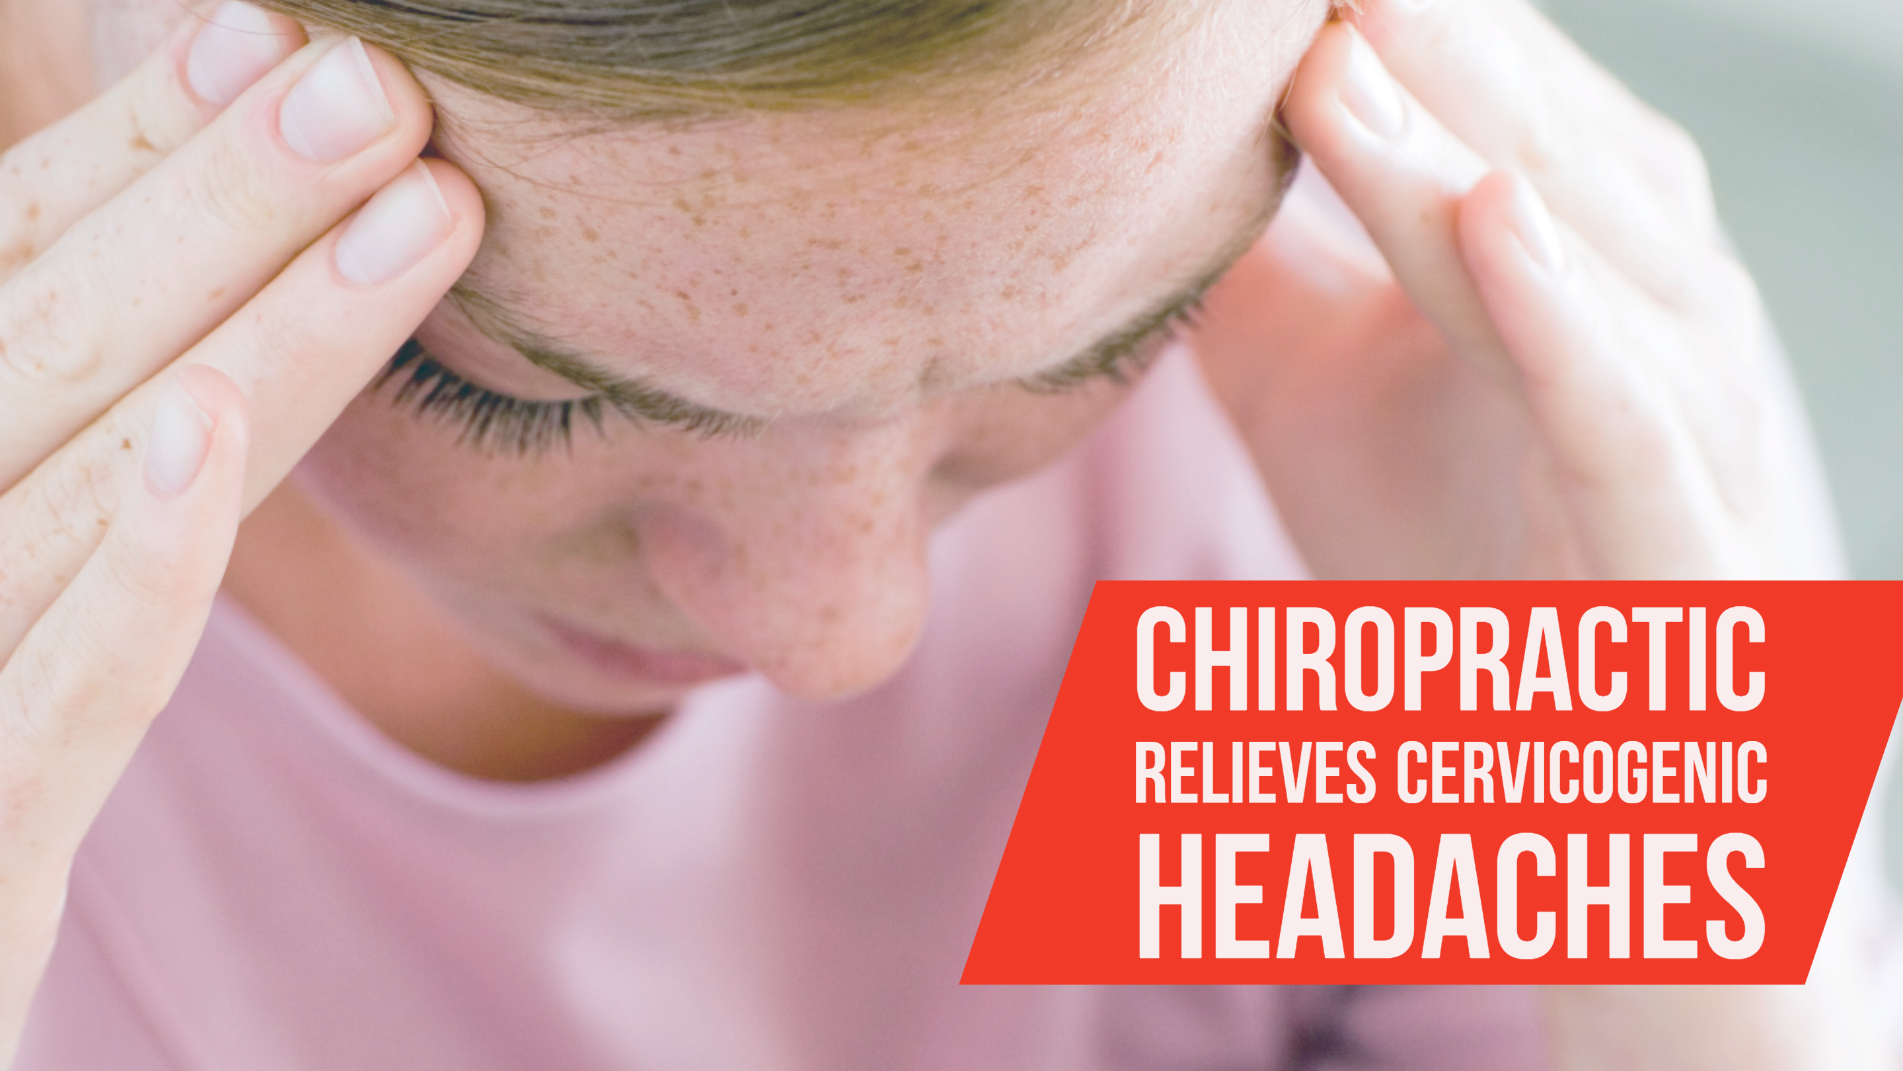 Video Chiropractic Relieves Cervicogenic Headaches Chironexus News 7080